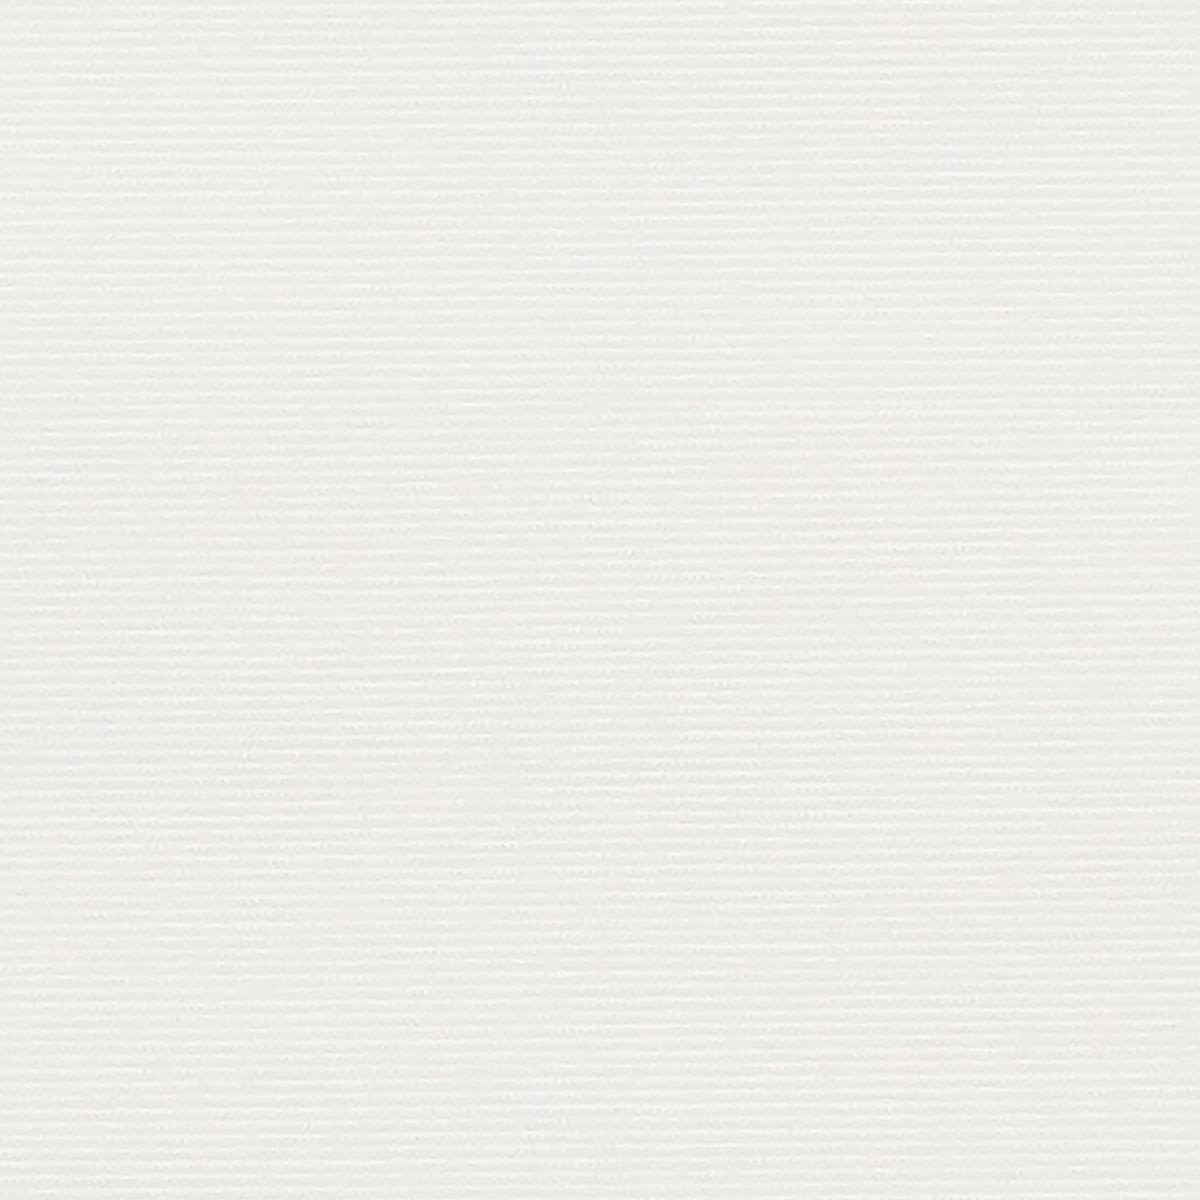 Persiana Enrollable Translucida Voguish 1.20 X 1.80 Blanco Classic